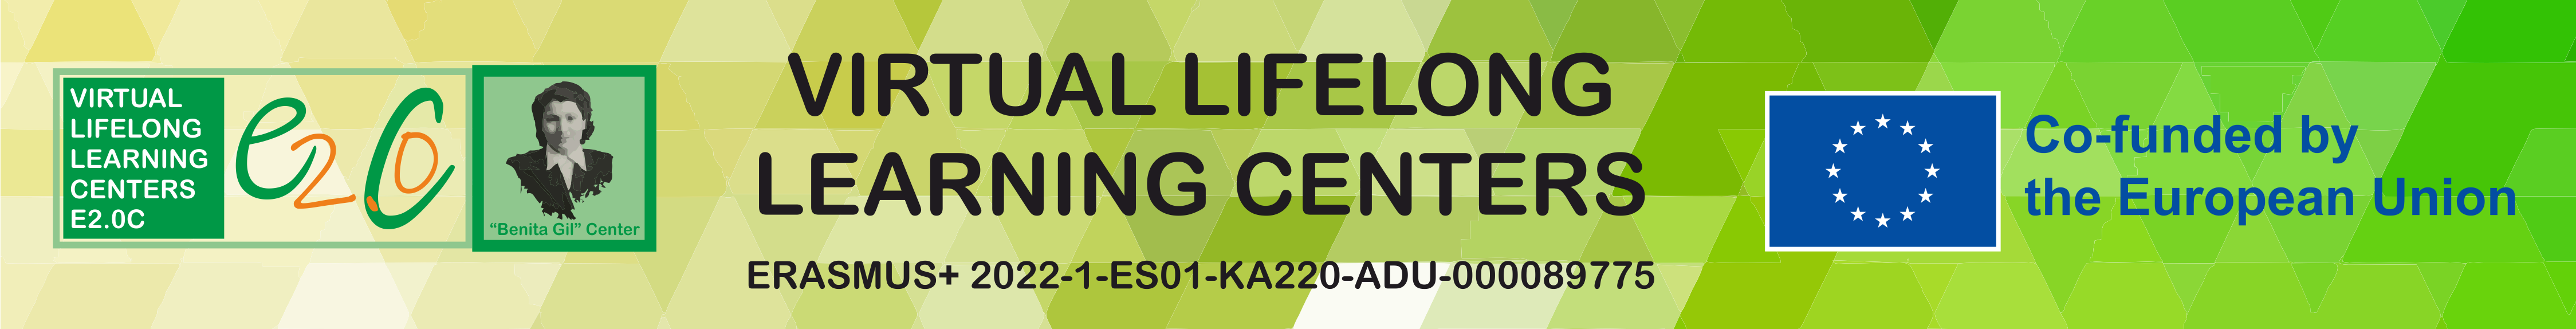 Virtual lifelong learning centers